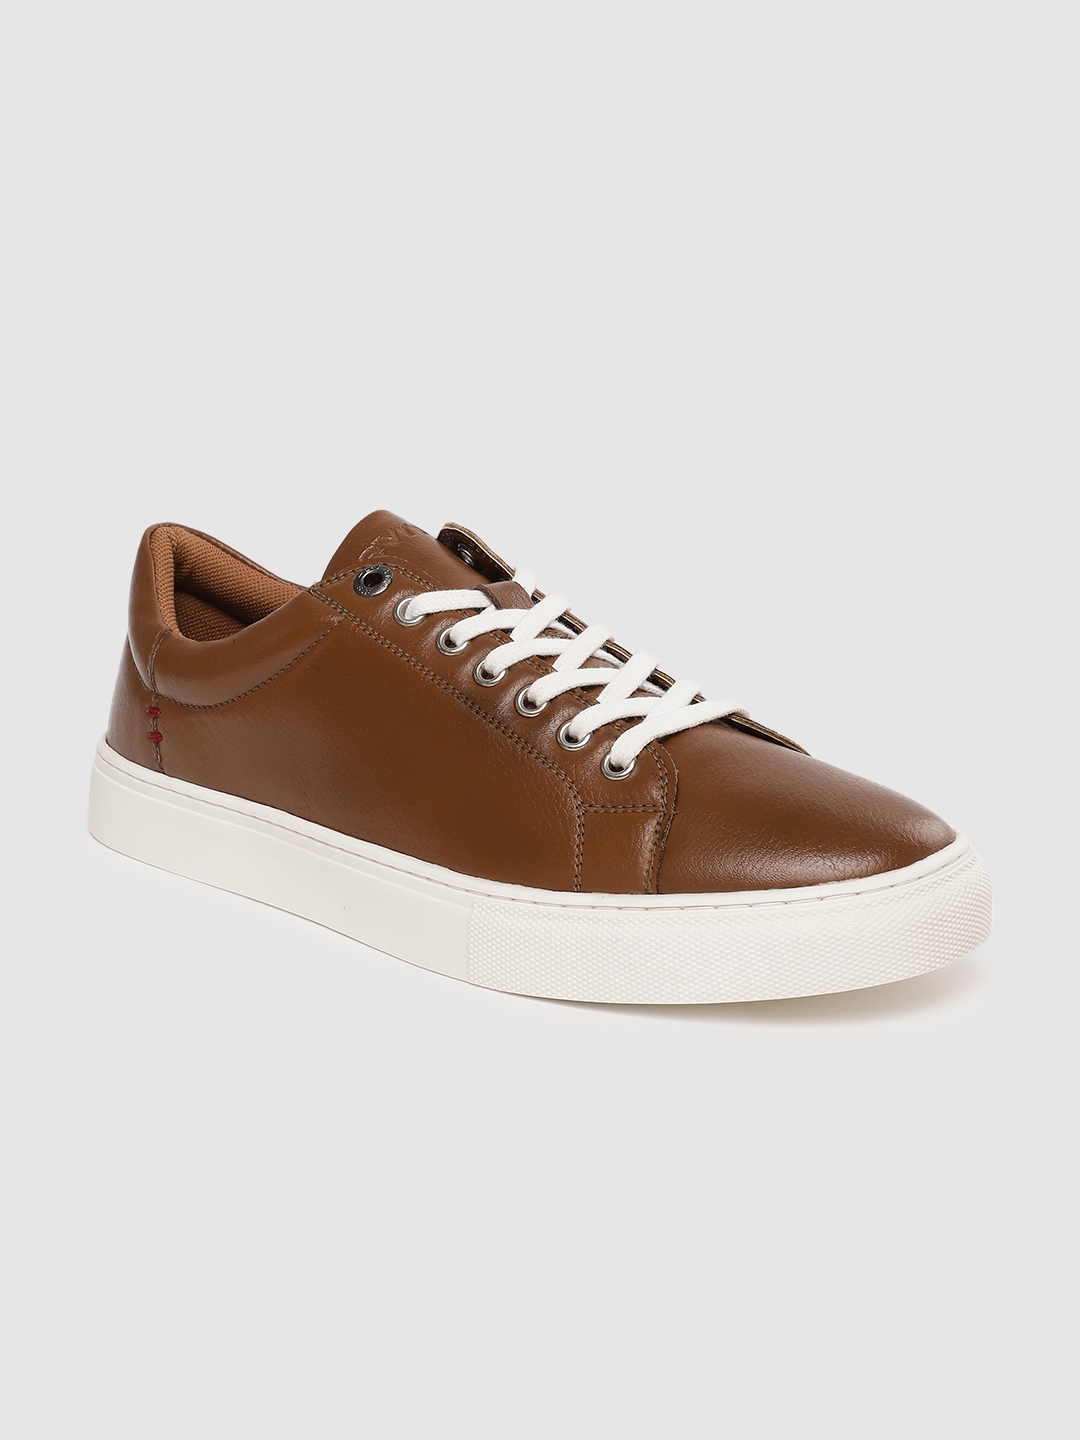 Buy Levis Men Brown Sneakers - Casual Shoes for Men 10266877 | Myntra